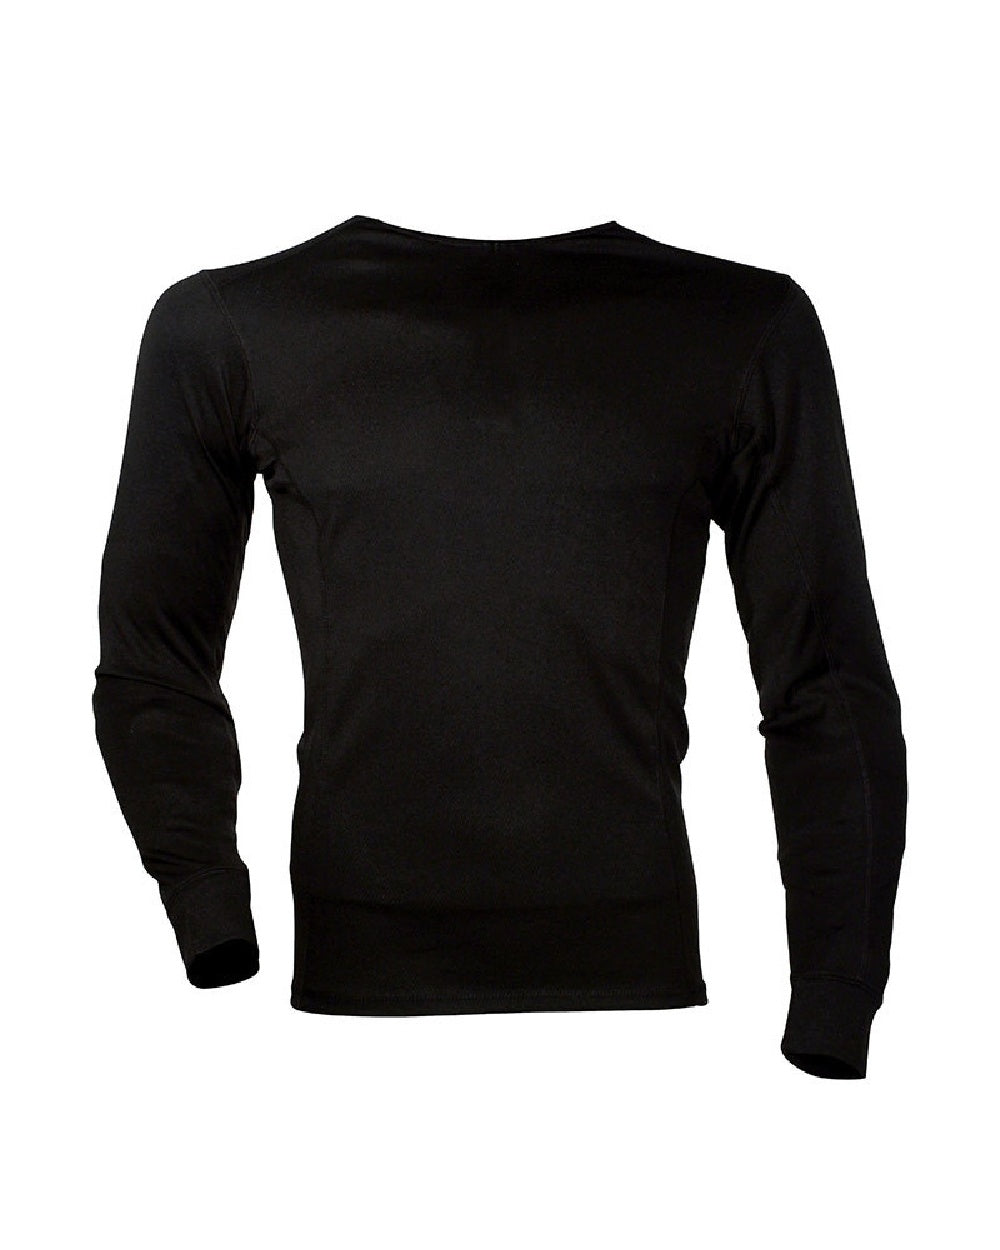 Percussion Megadry Sweatshirt in Black 